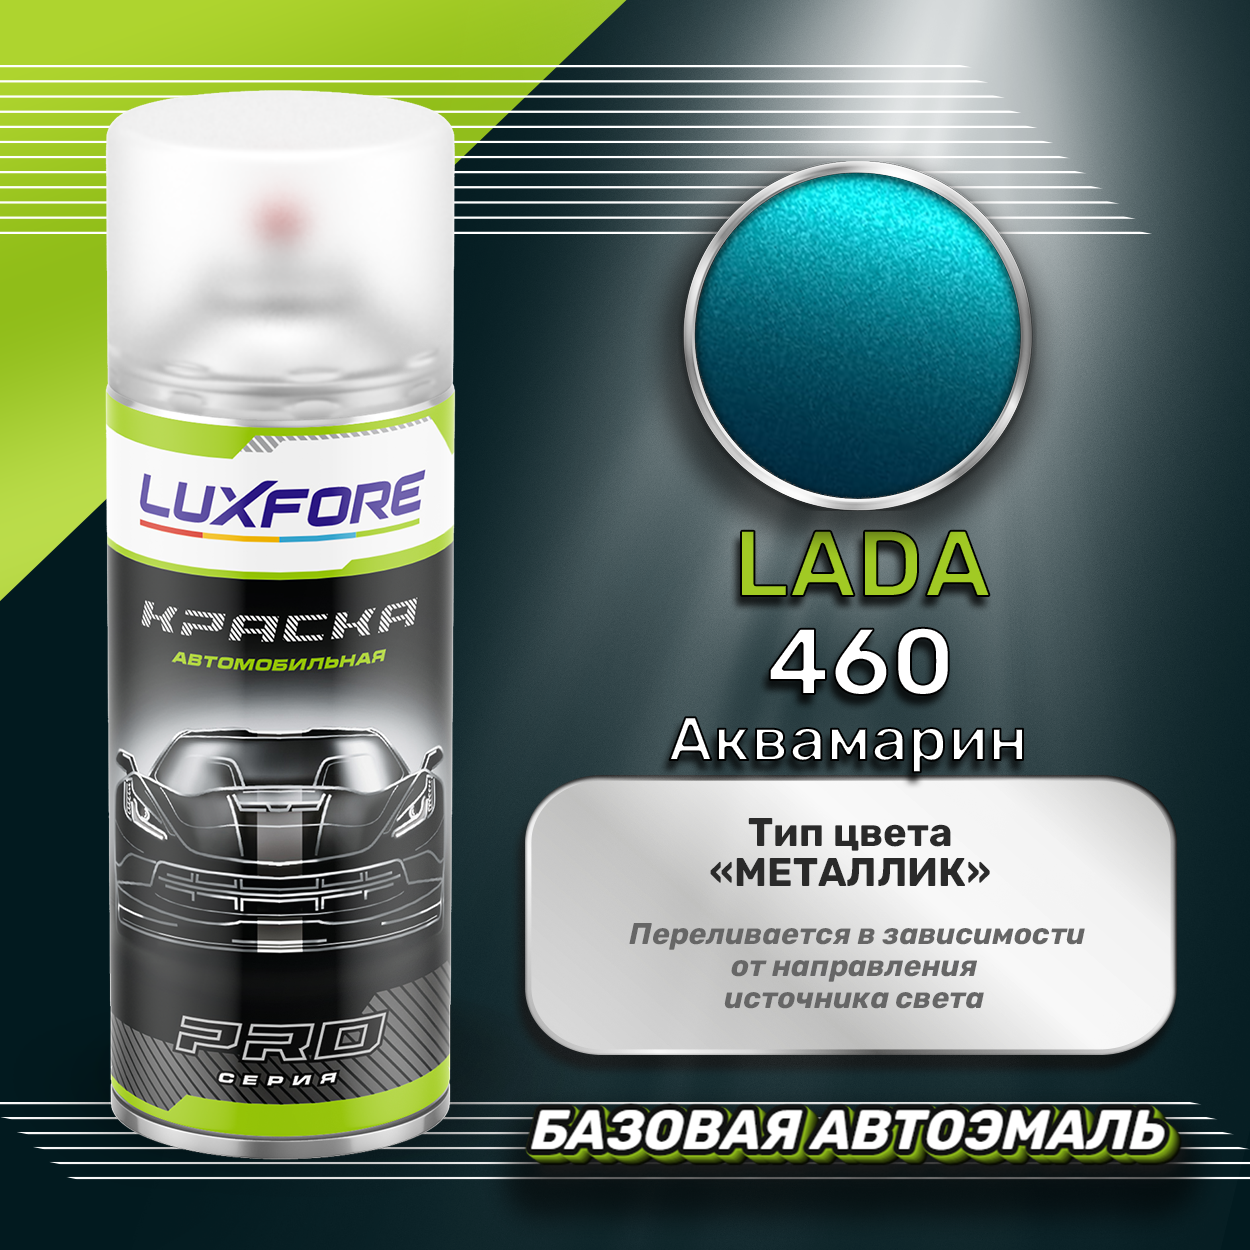 Luxfore аэрозольная краска LADA 460 Аквамарин 400 мл